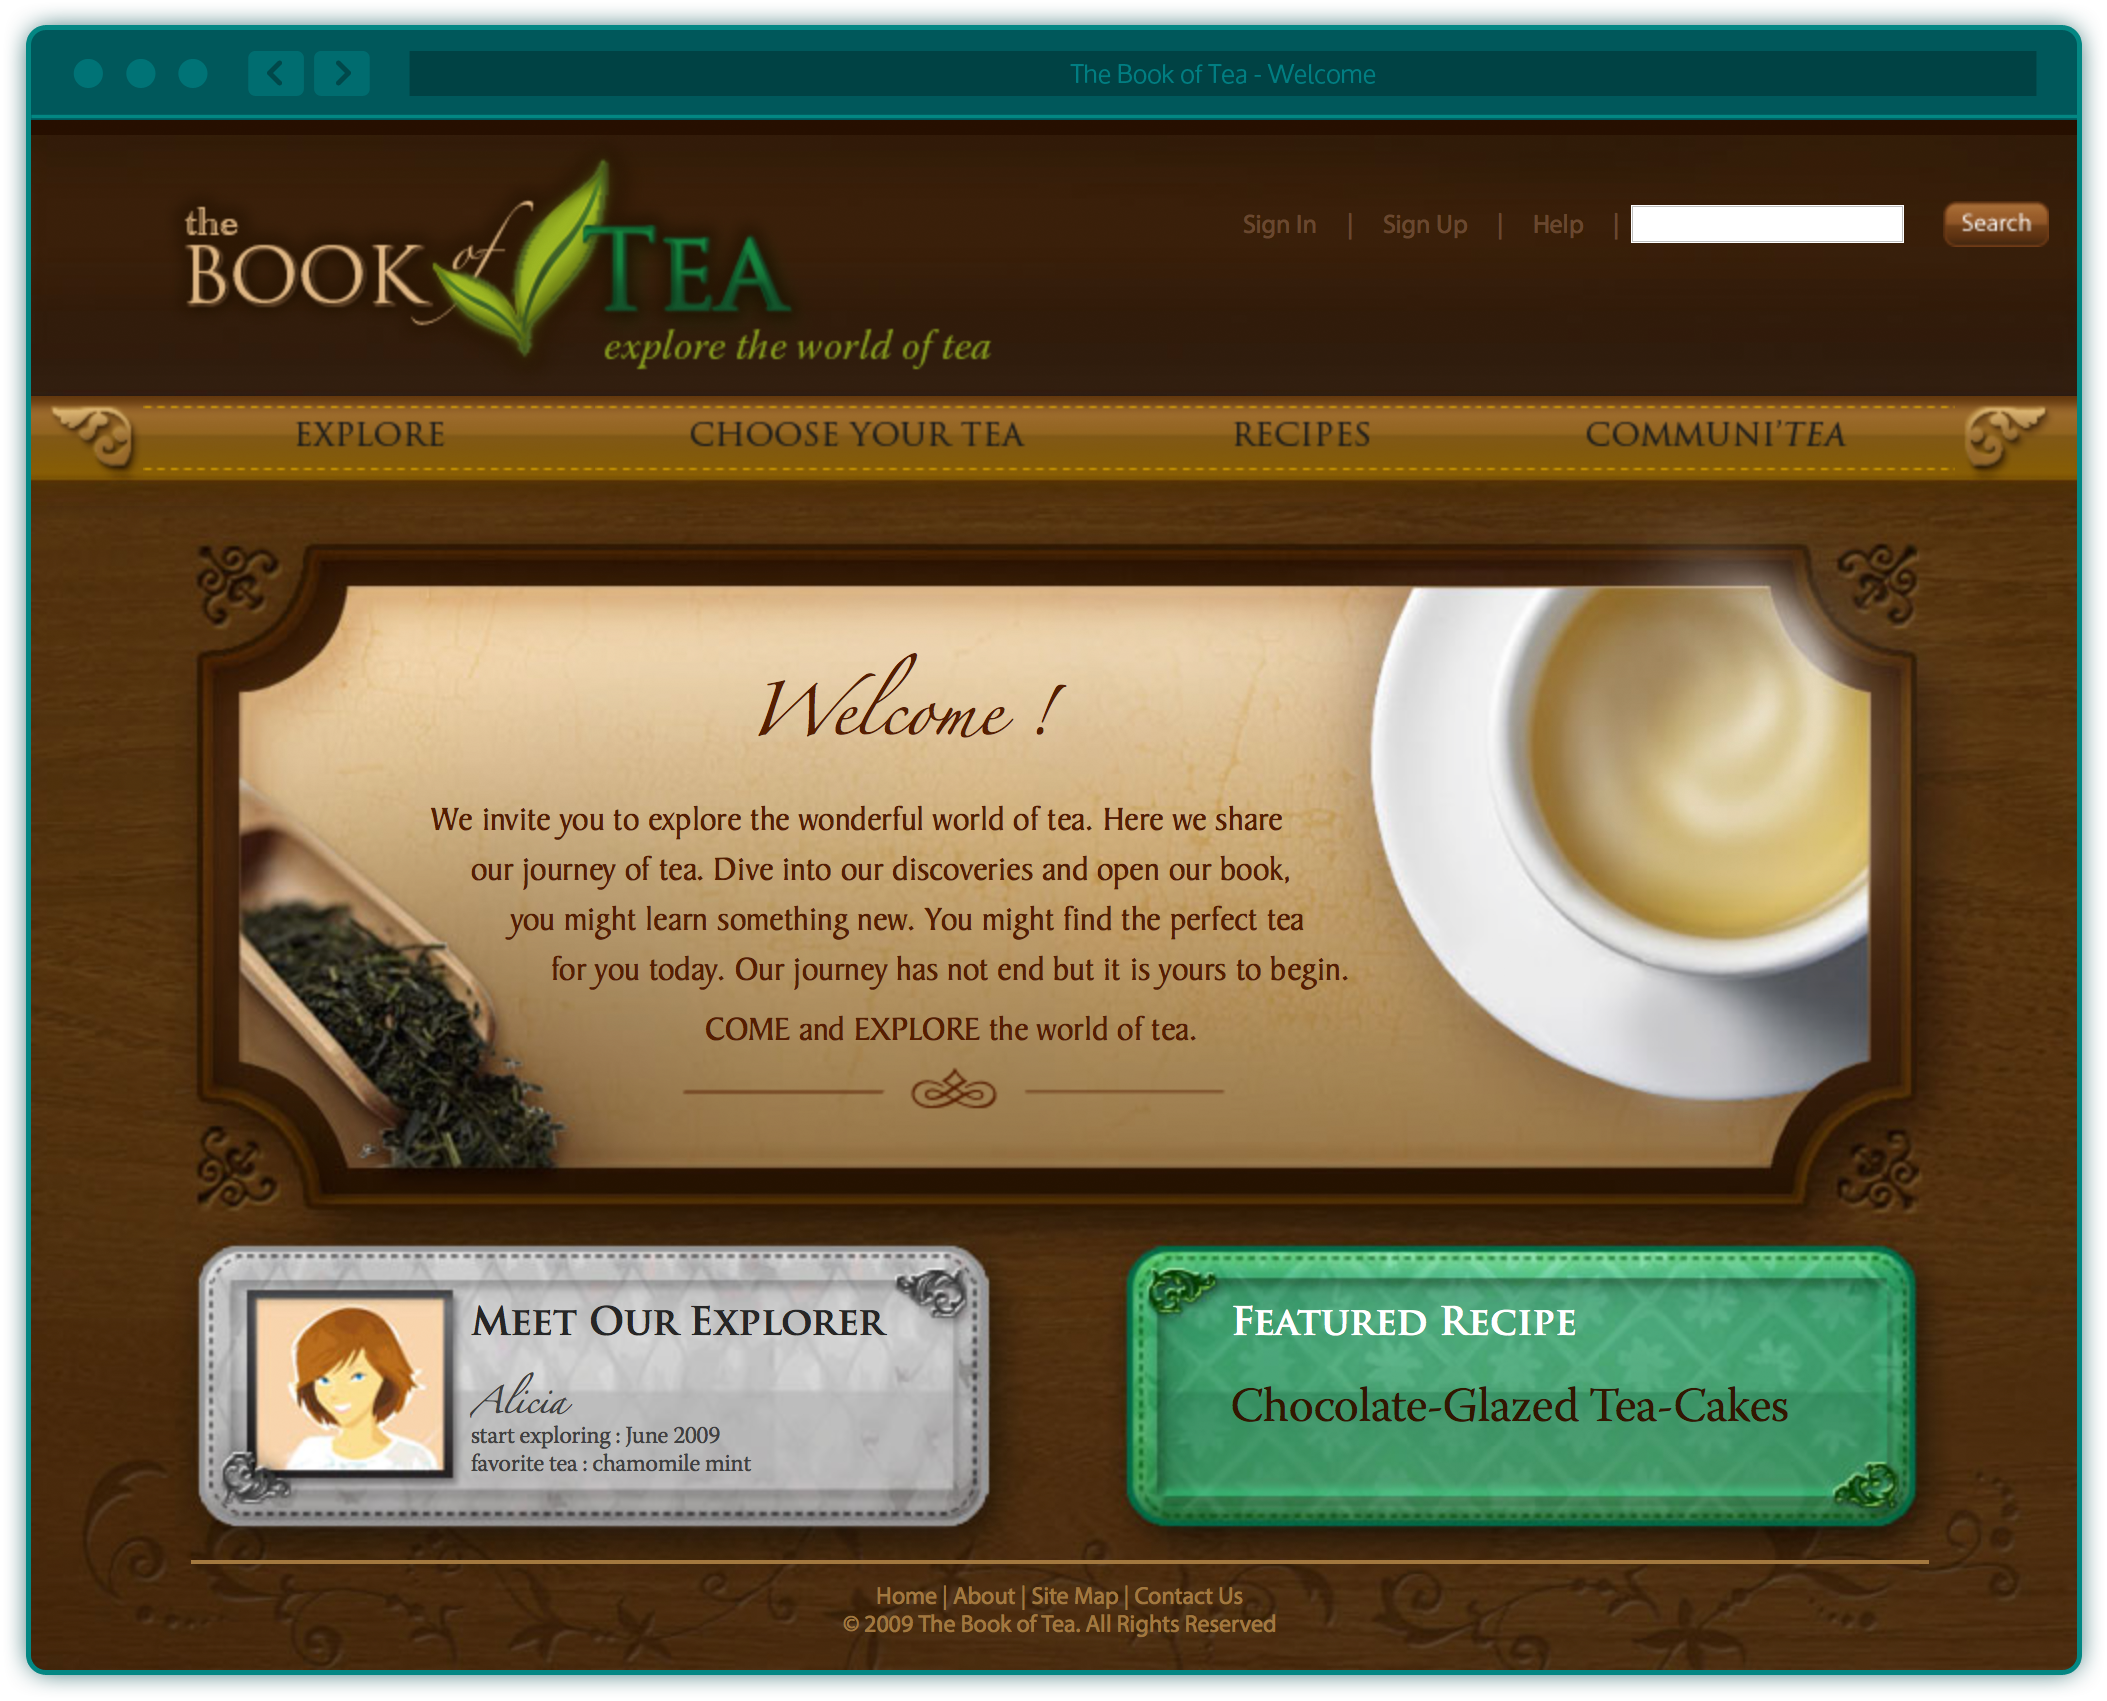 The Book of Tea website - homepage